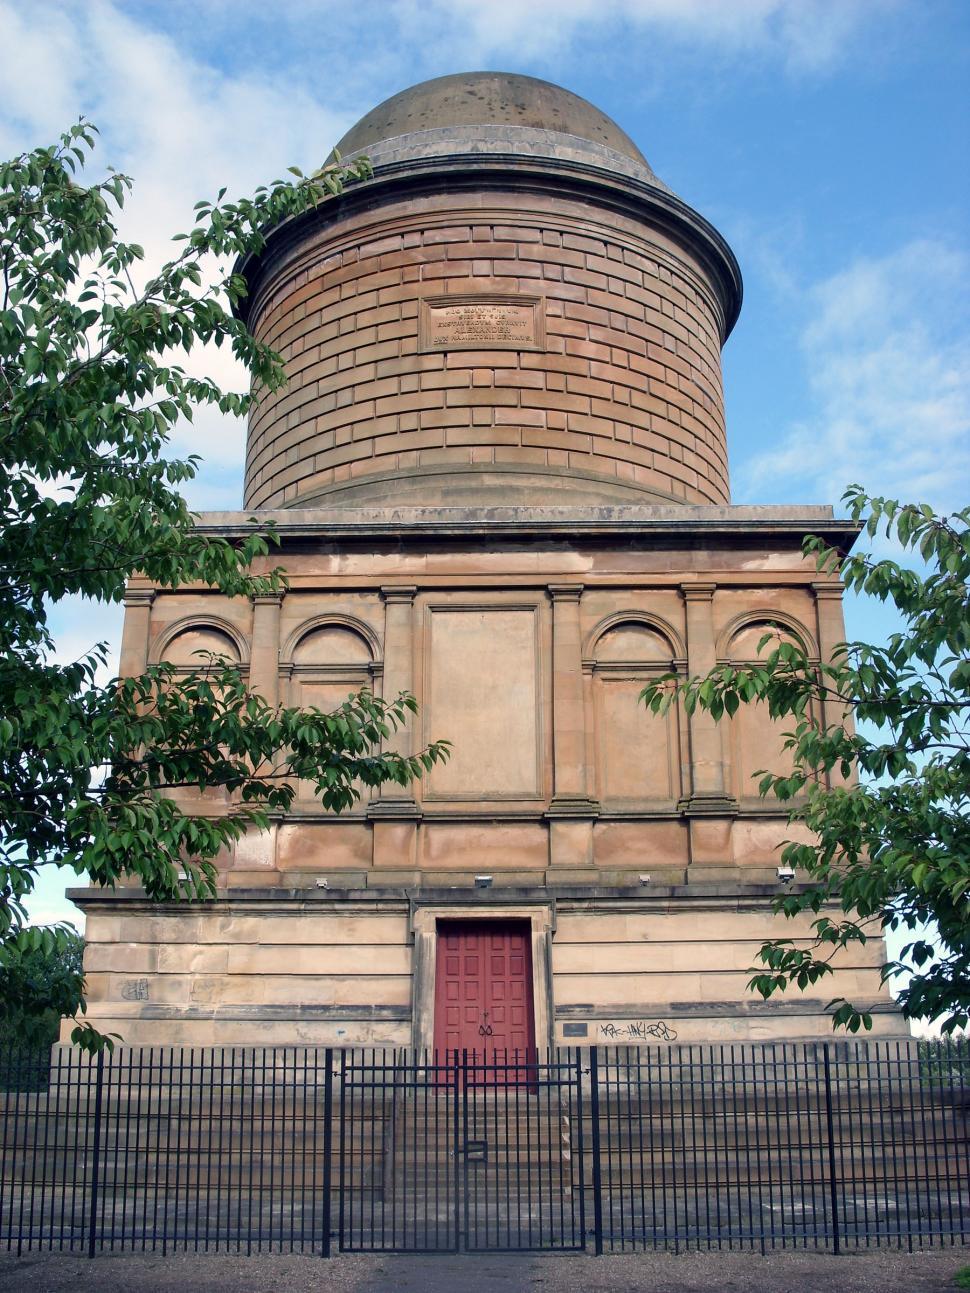 Free Image of Mausoleum 